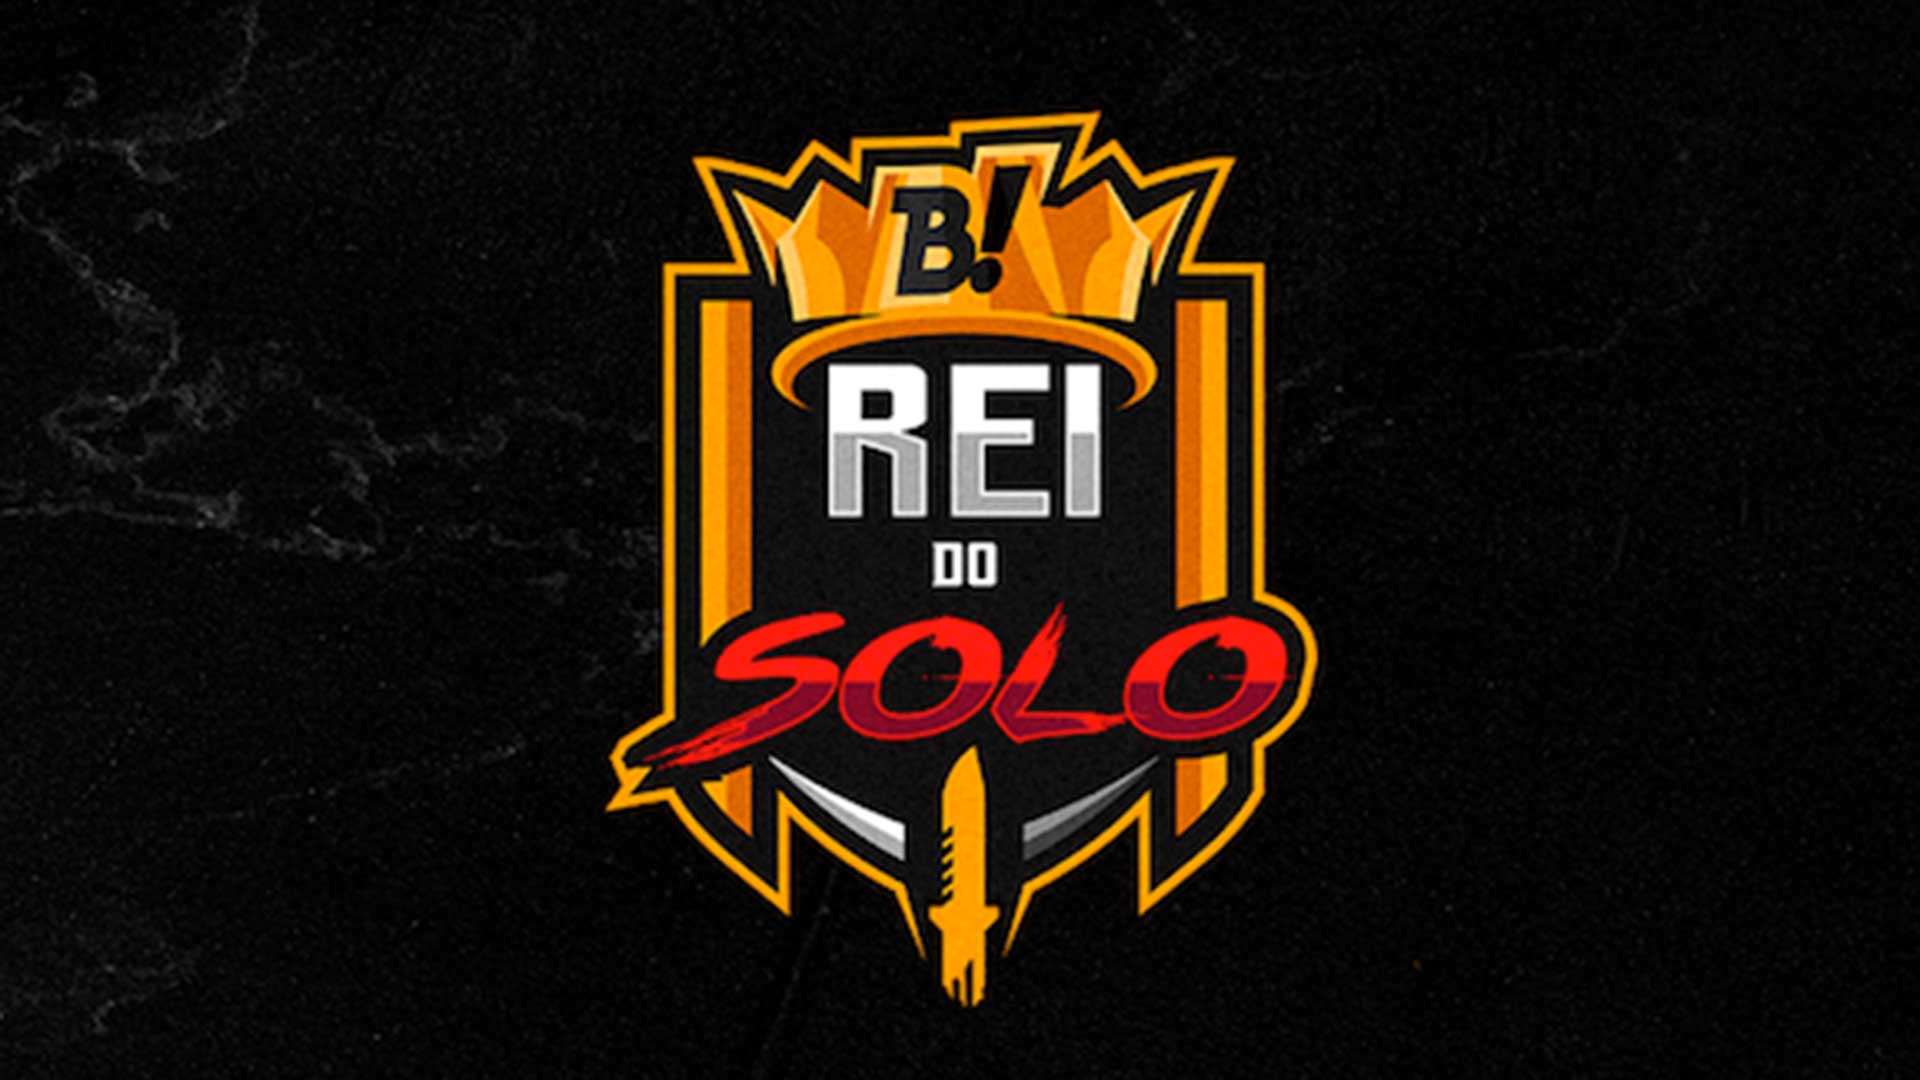 Majestade Solo Free Fire: principal torneio x1 do Brasil chega a